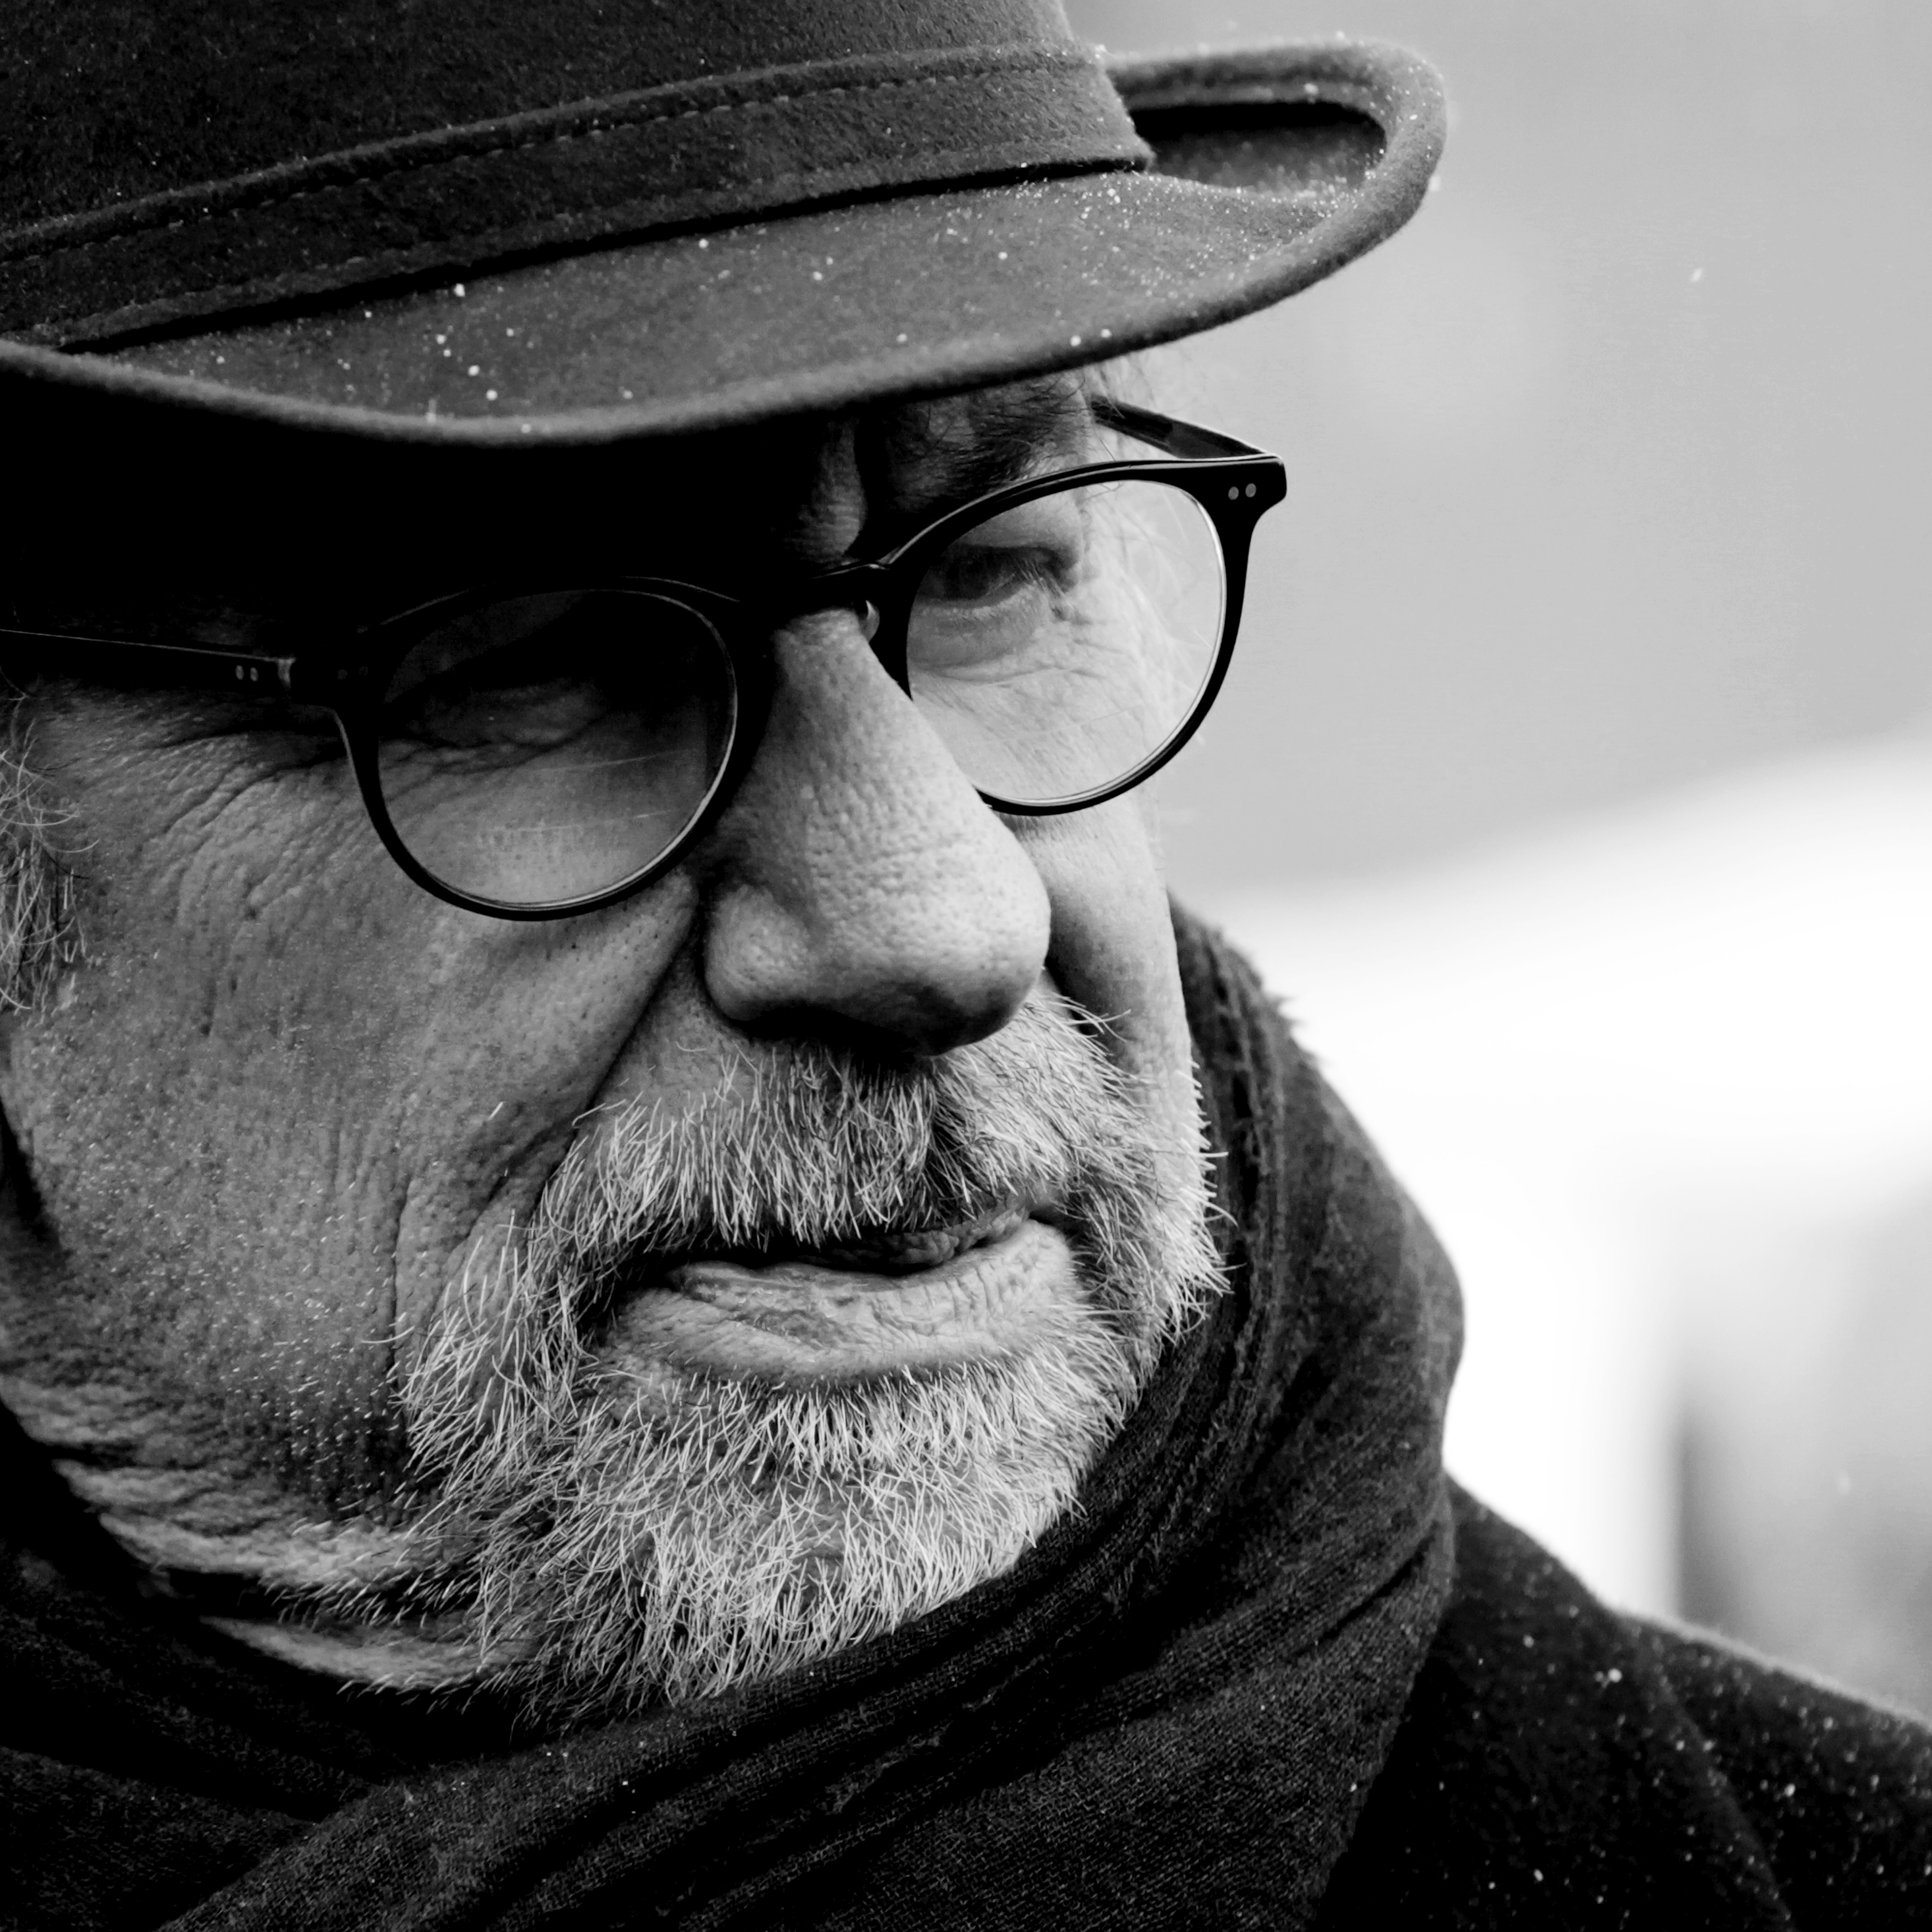 Steven Spielberg unmade movies